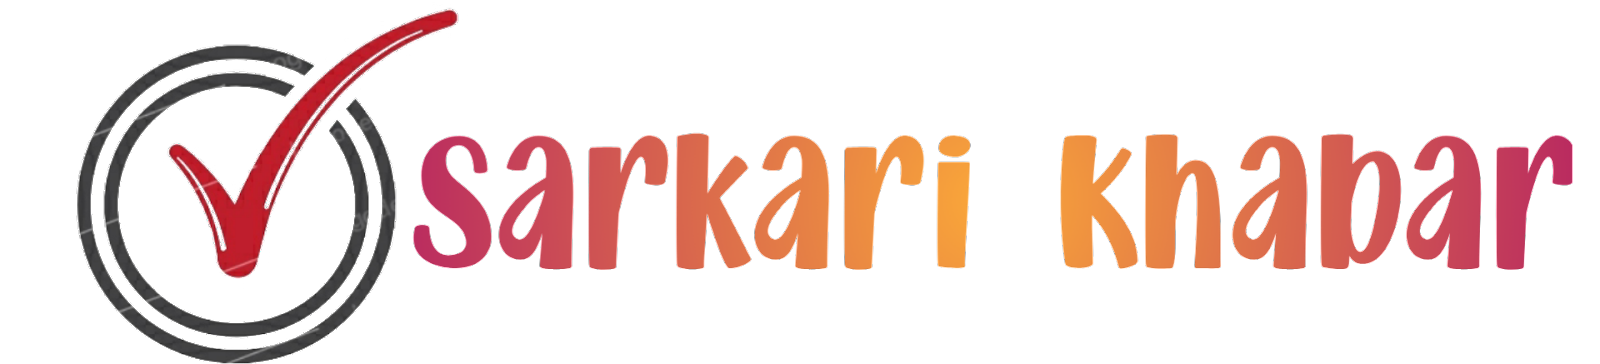 Sarkari Khabar